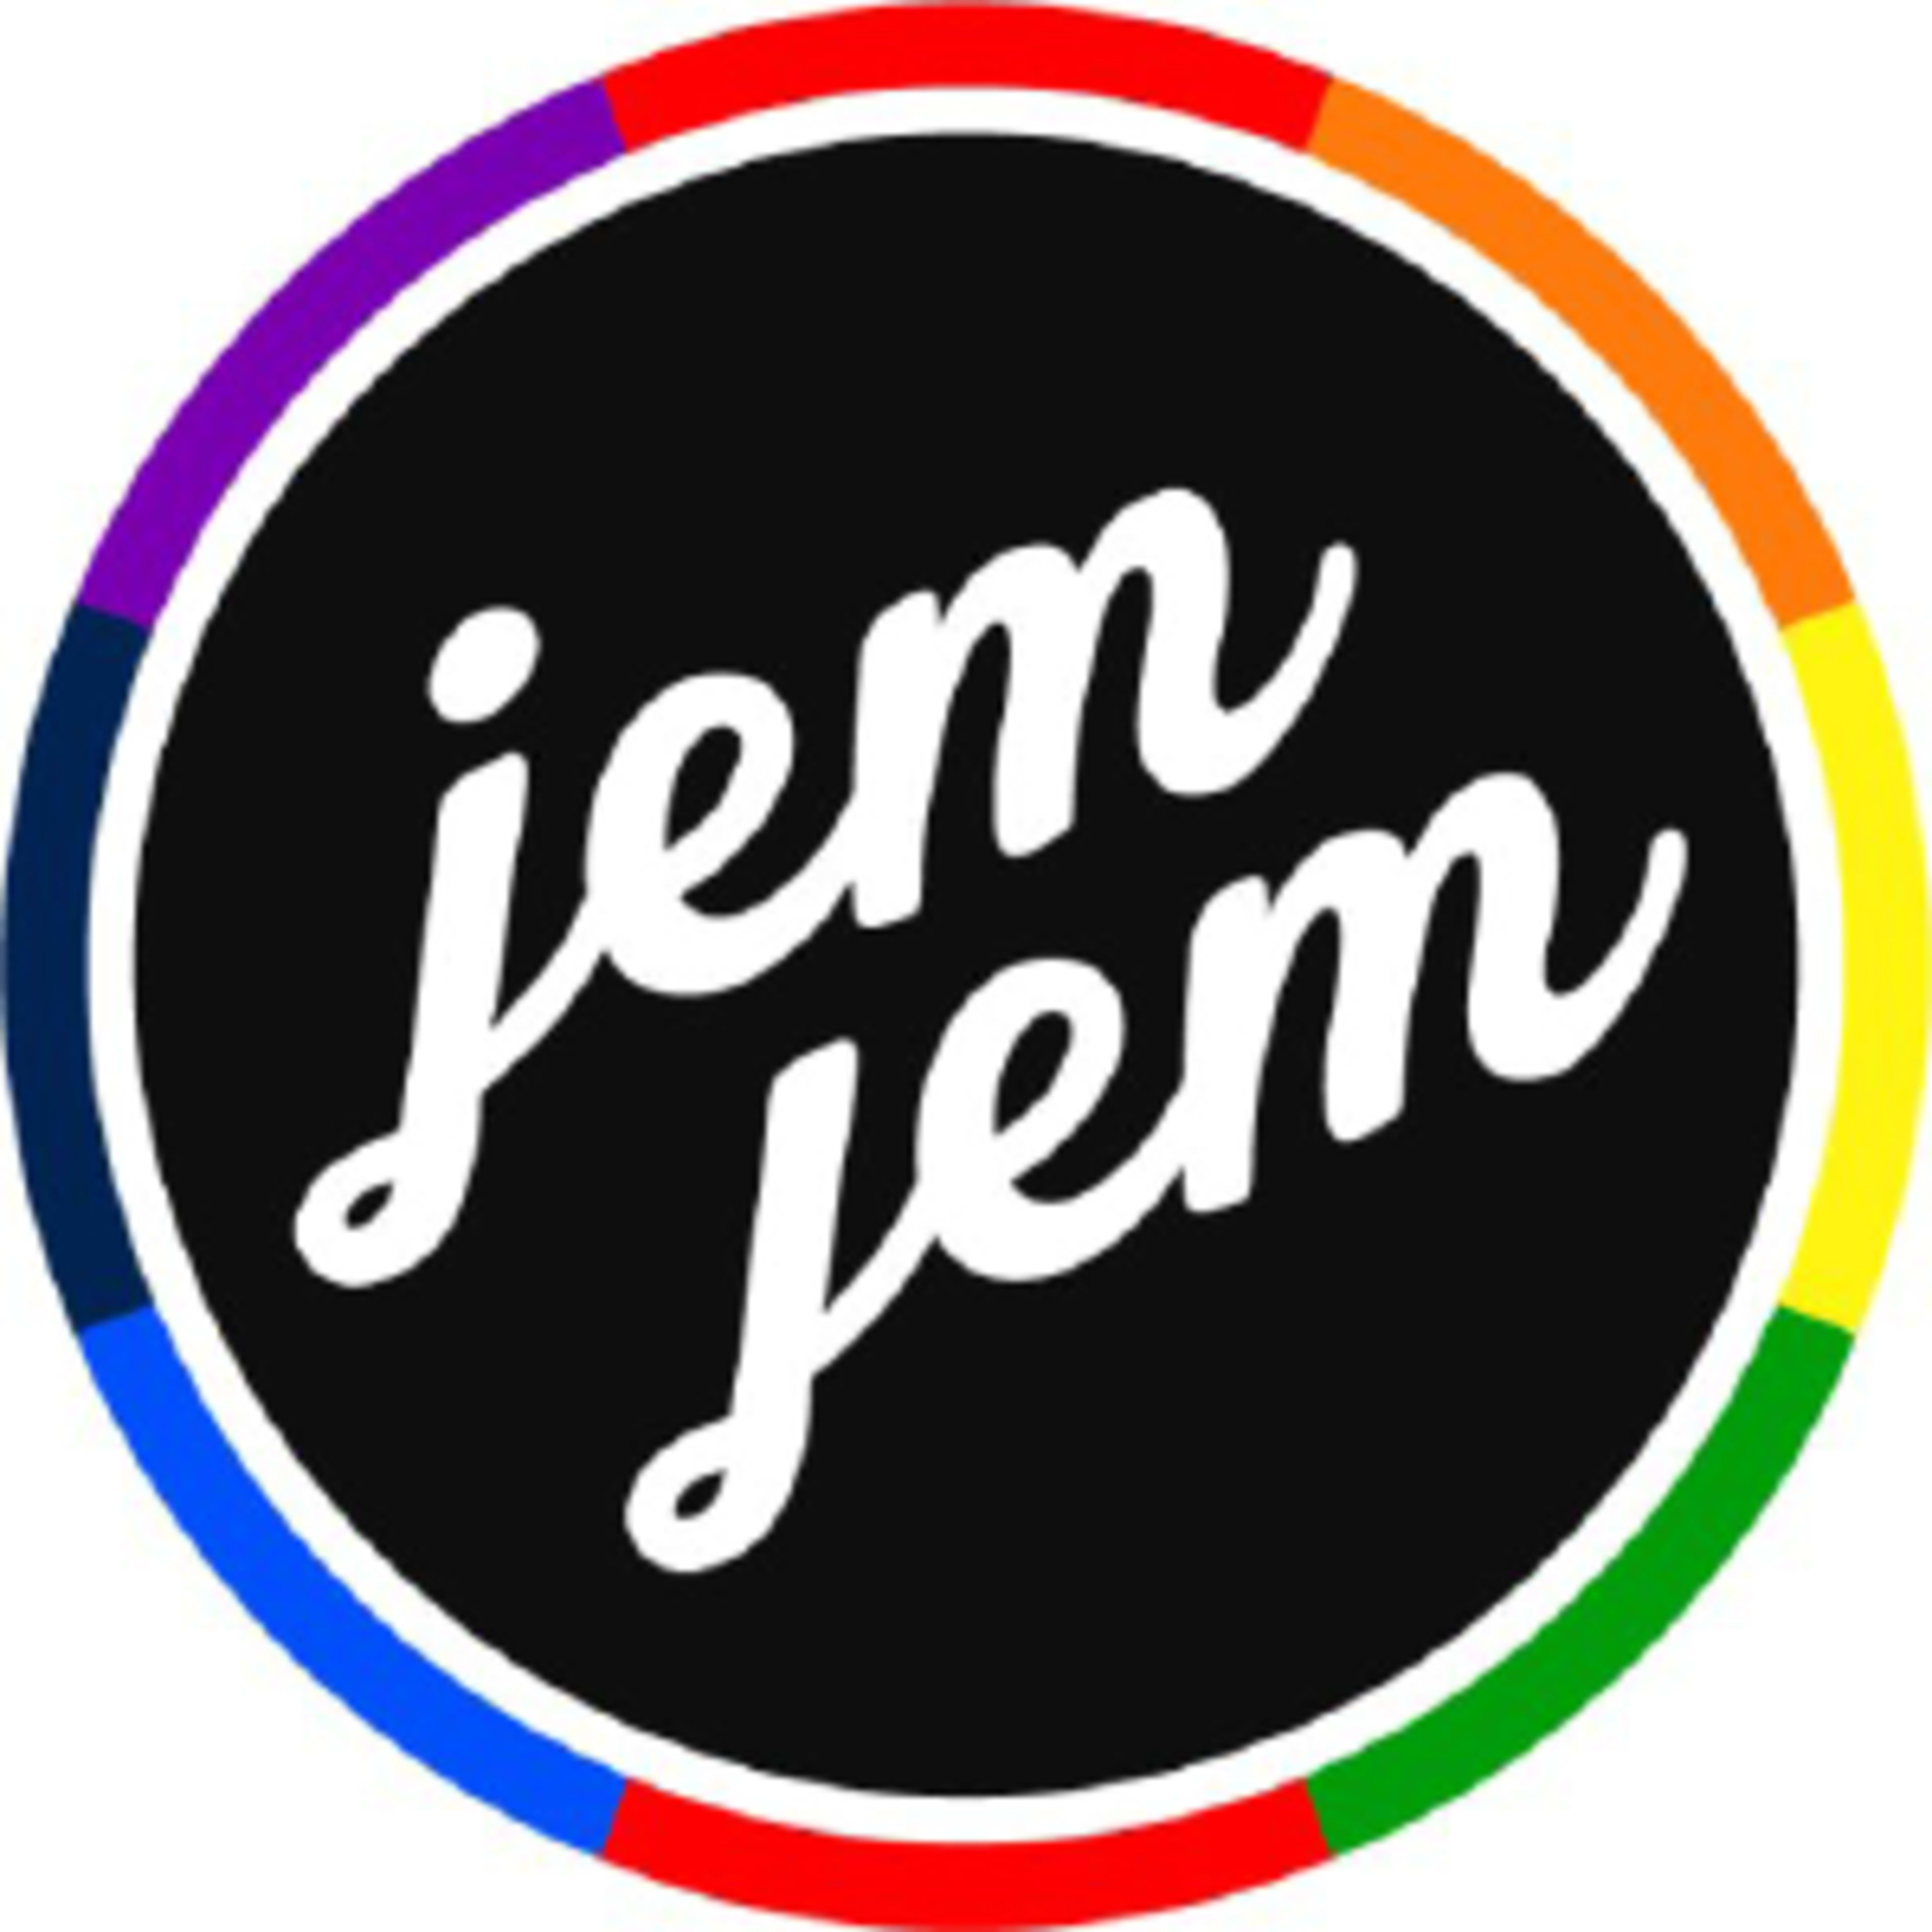 JemJemCode